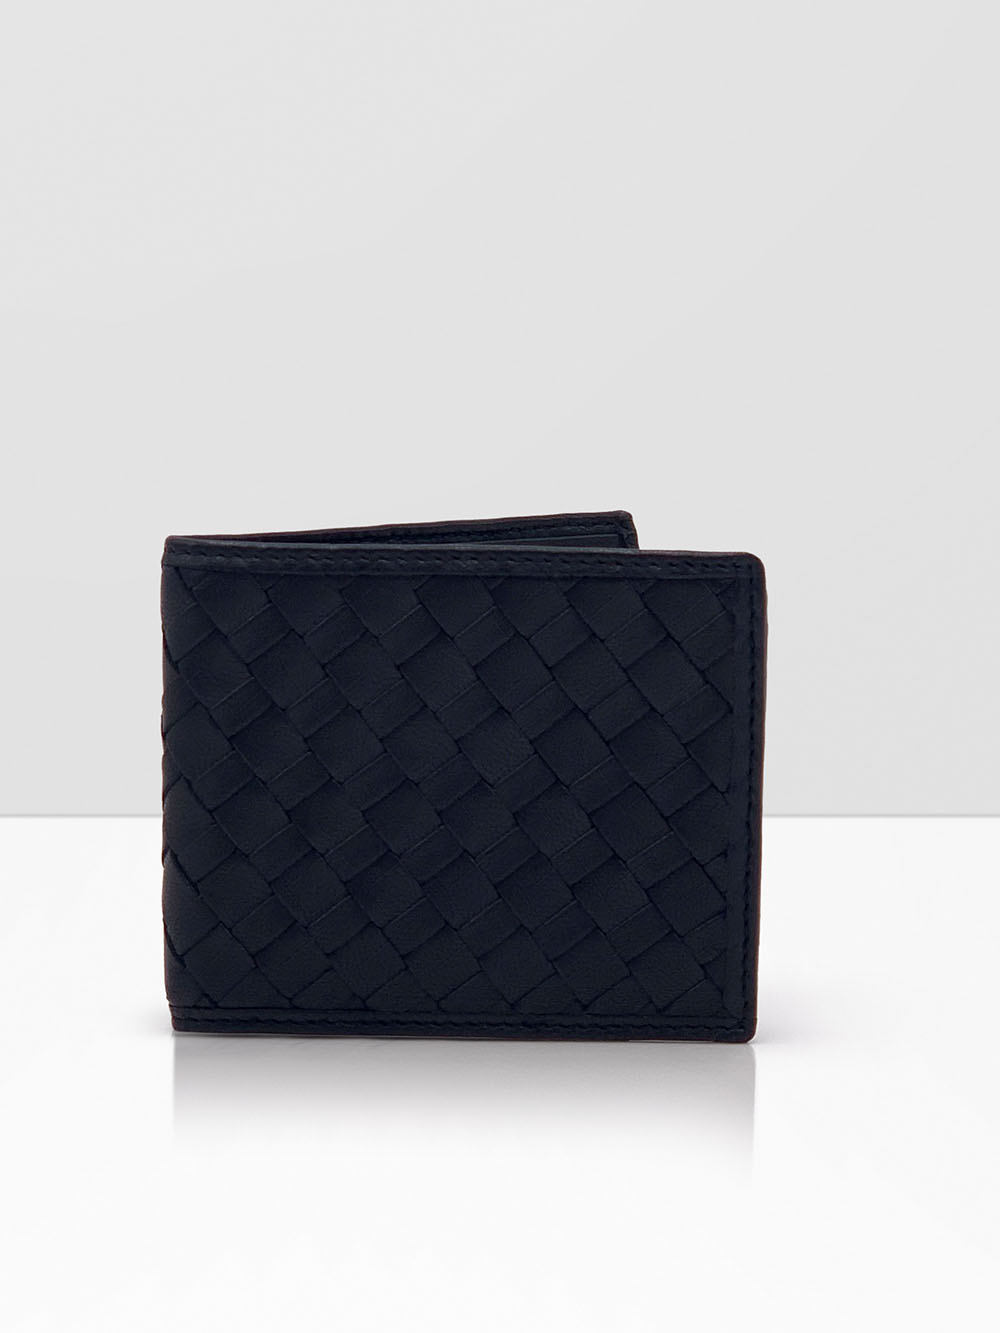 Treccio Collection Nappa Leather Wallet with Window - Black , Handmade ...